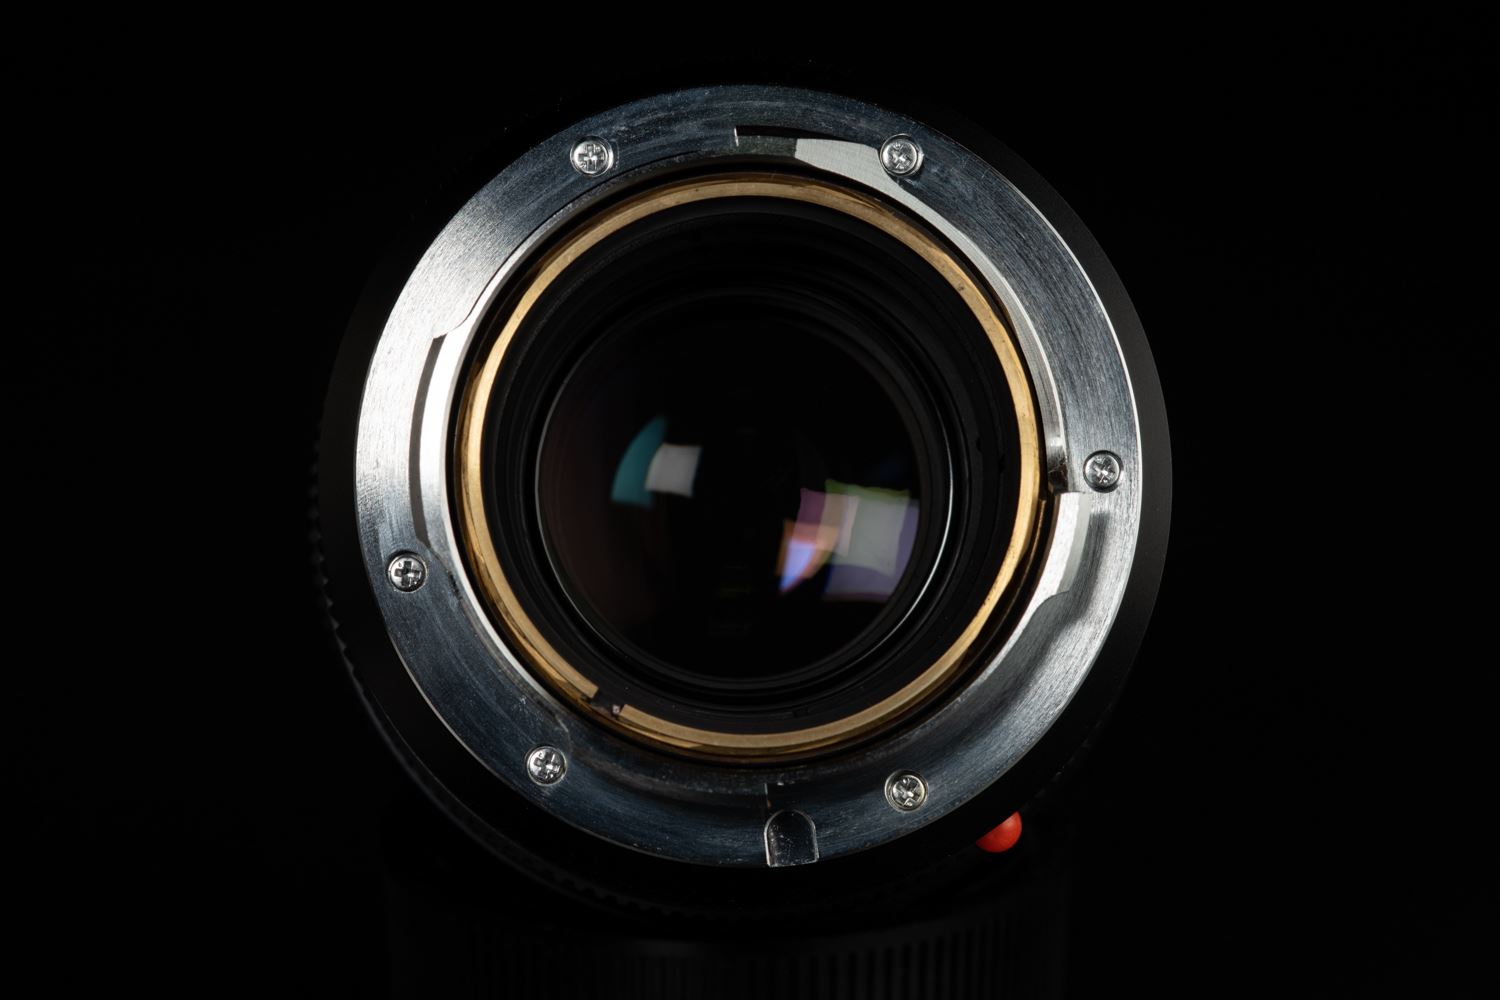 Picture of Leica APO-Summicron-M 75mm f/2 ASPH Black